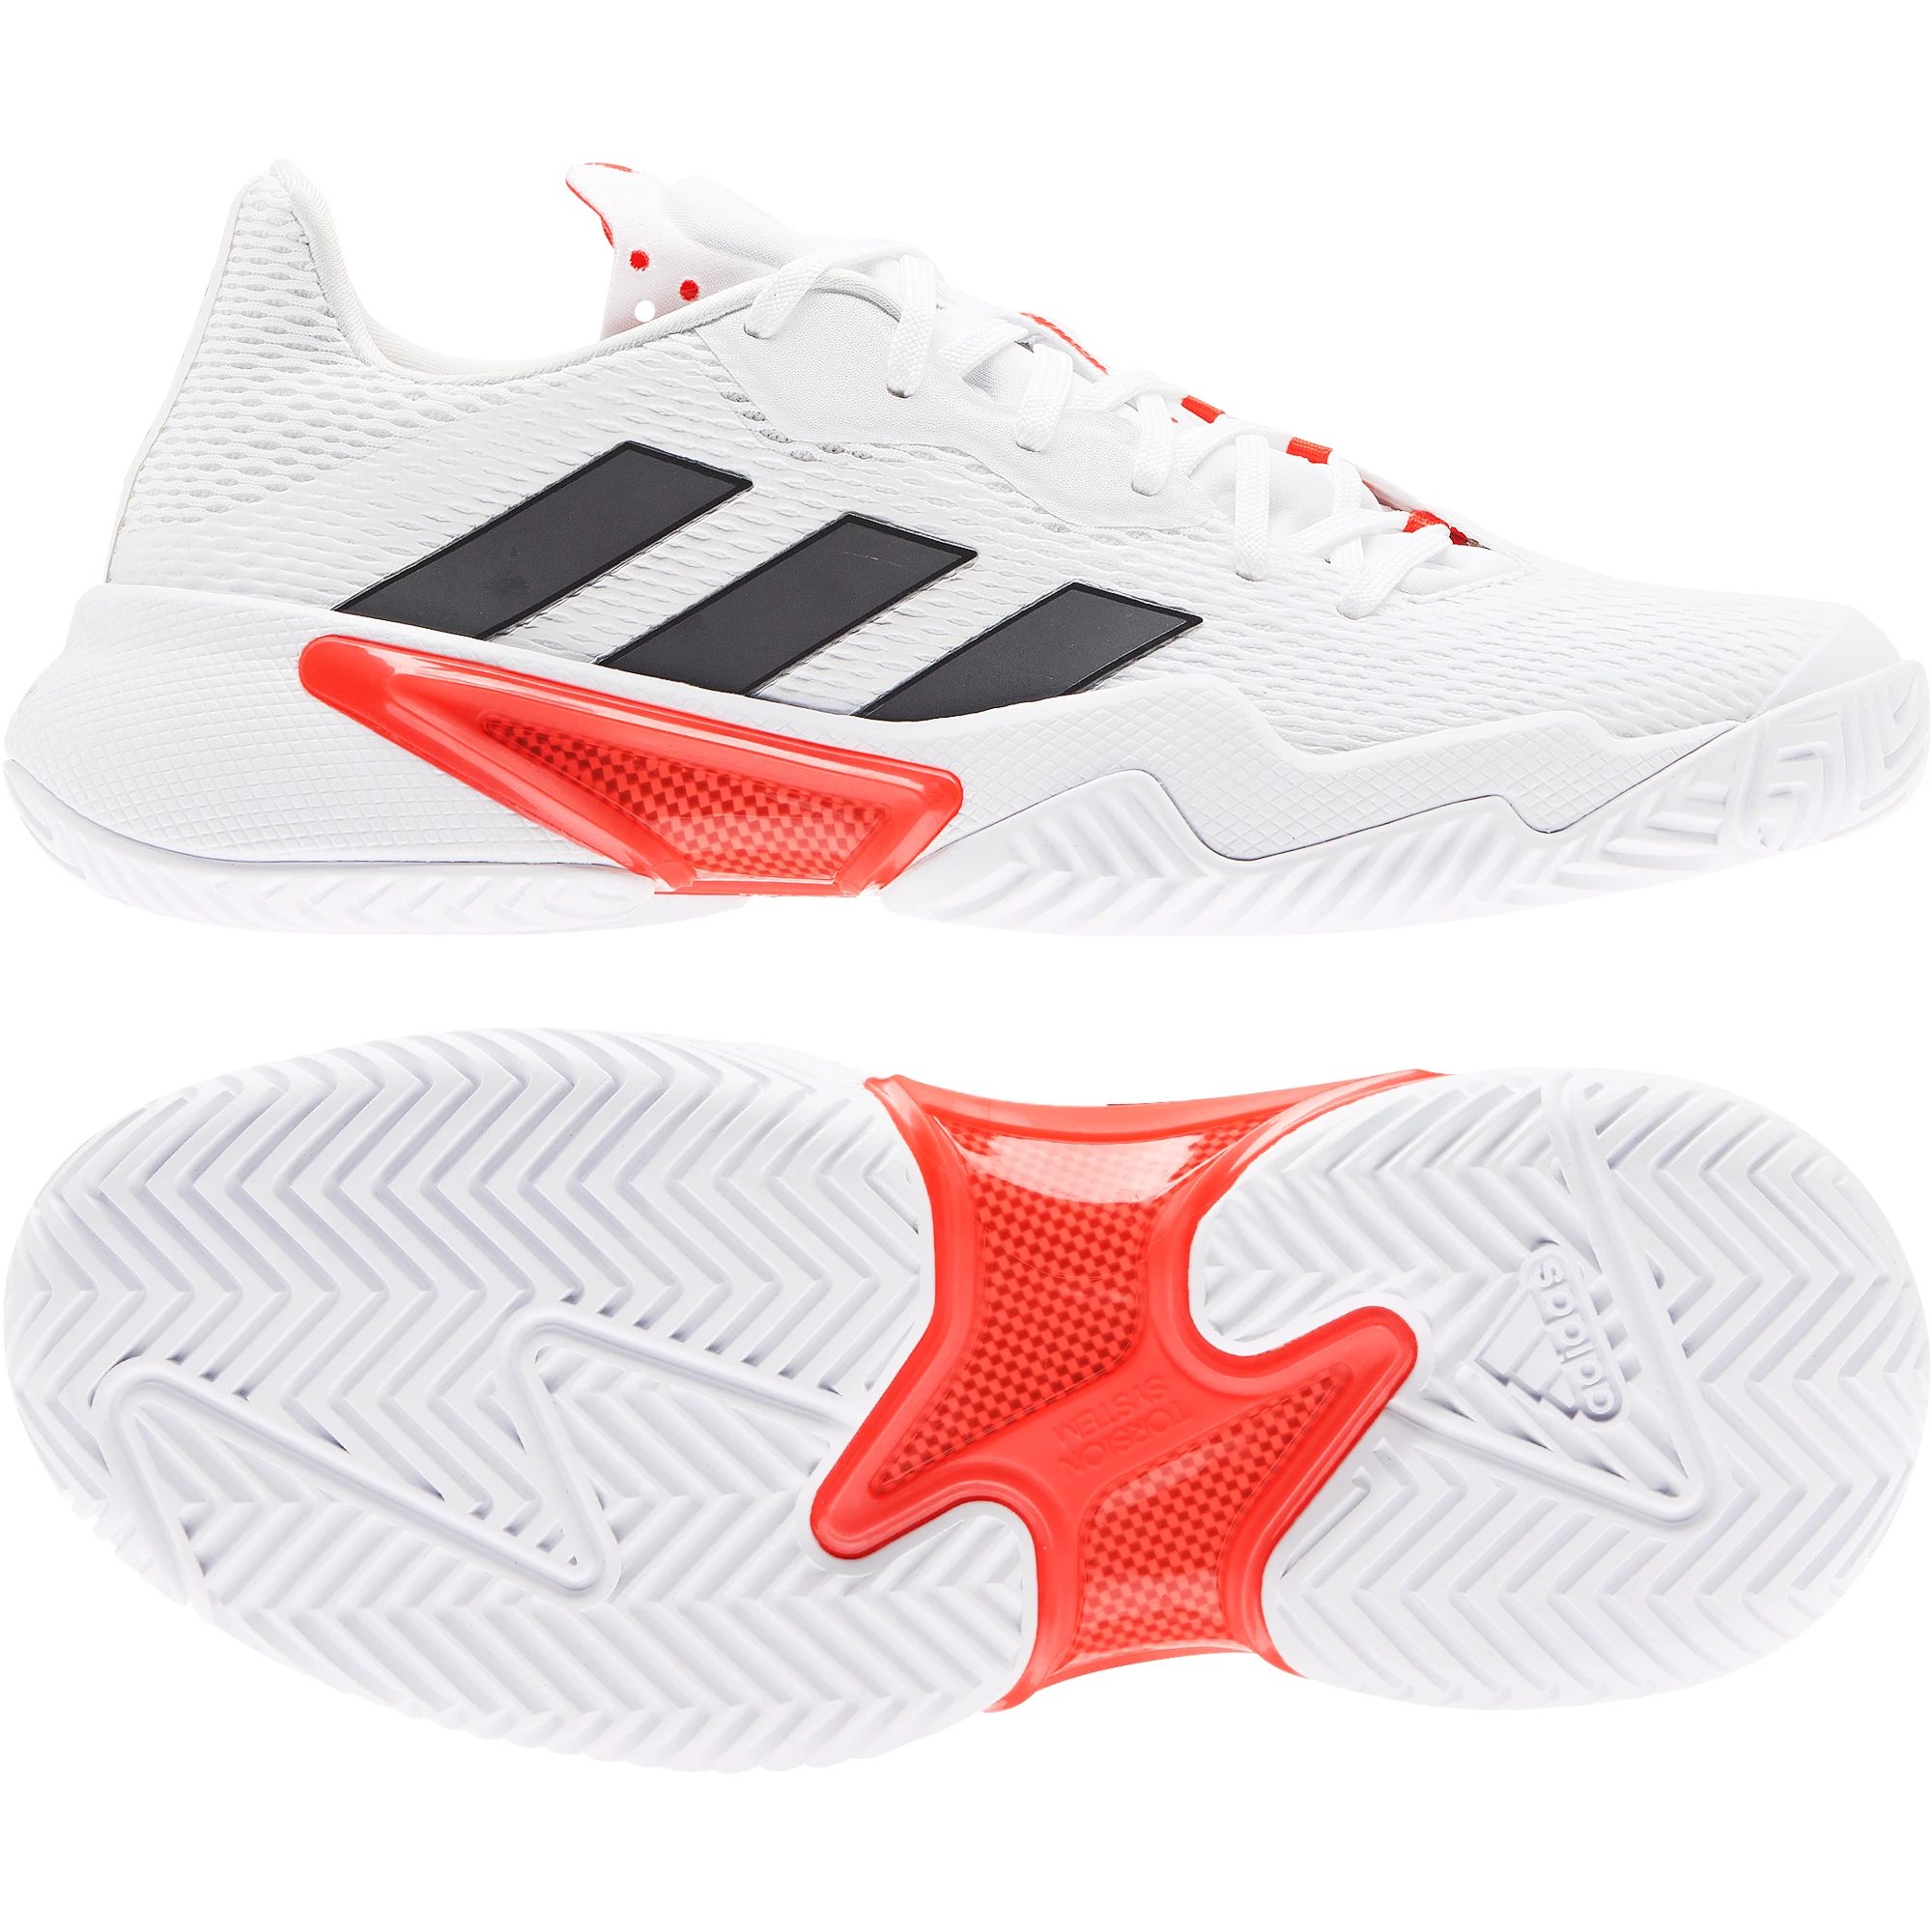 adidas Barricade W White/Black/Red Women's Tennis Shoes EUR 40 2/3